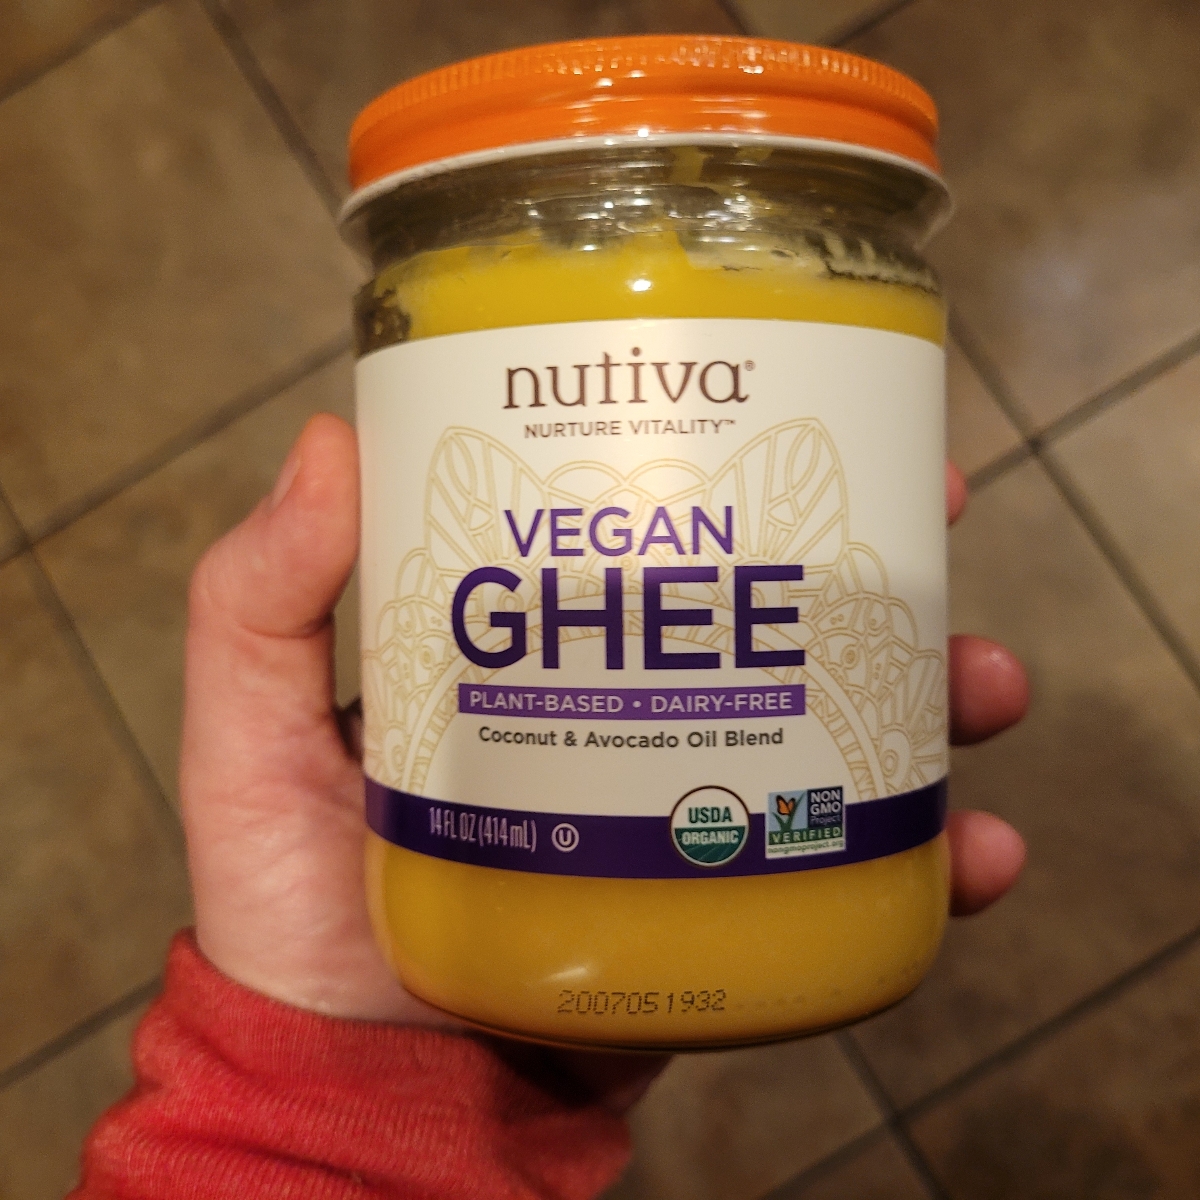 Organic Plant-Based Ghee – Nutiva